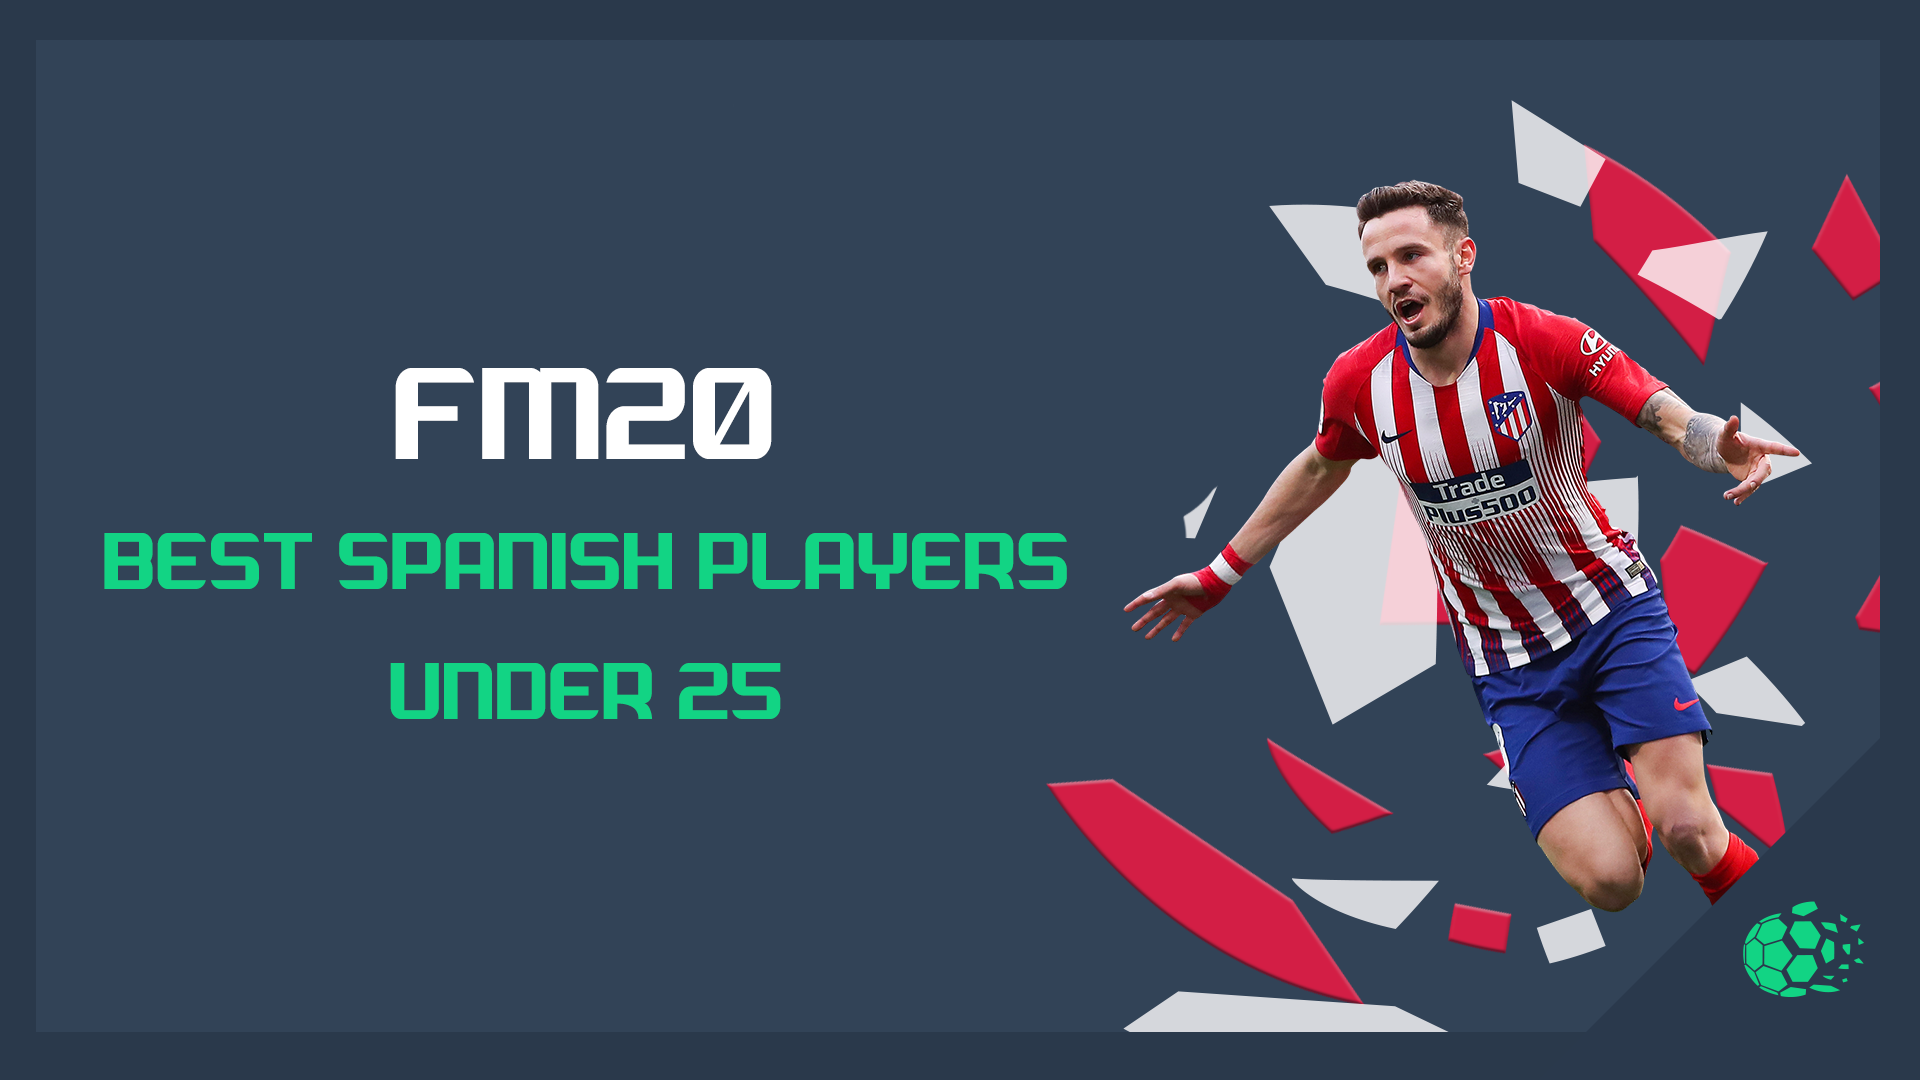 FM20 FM20: Best Spanish Players Under 25